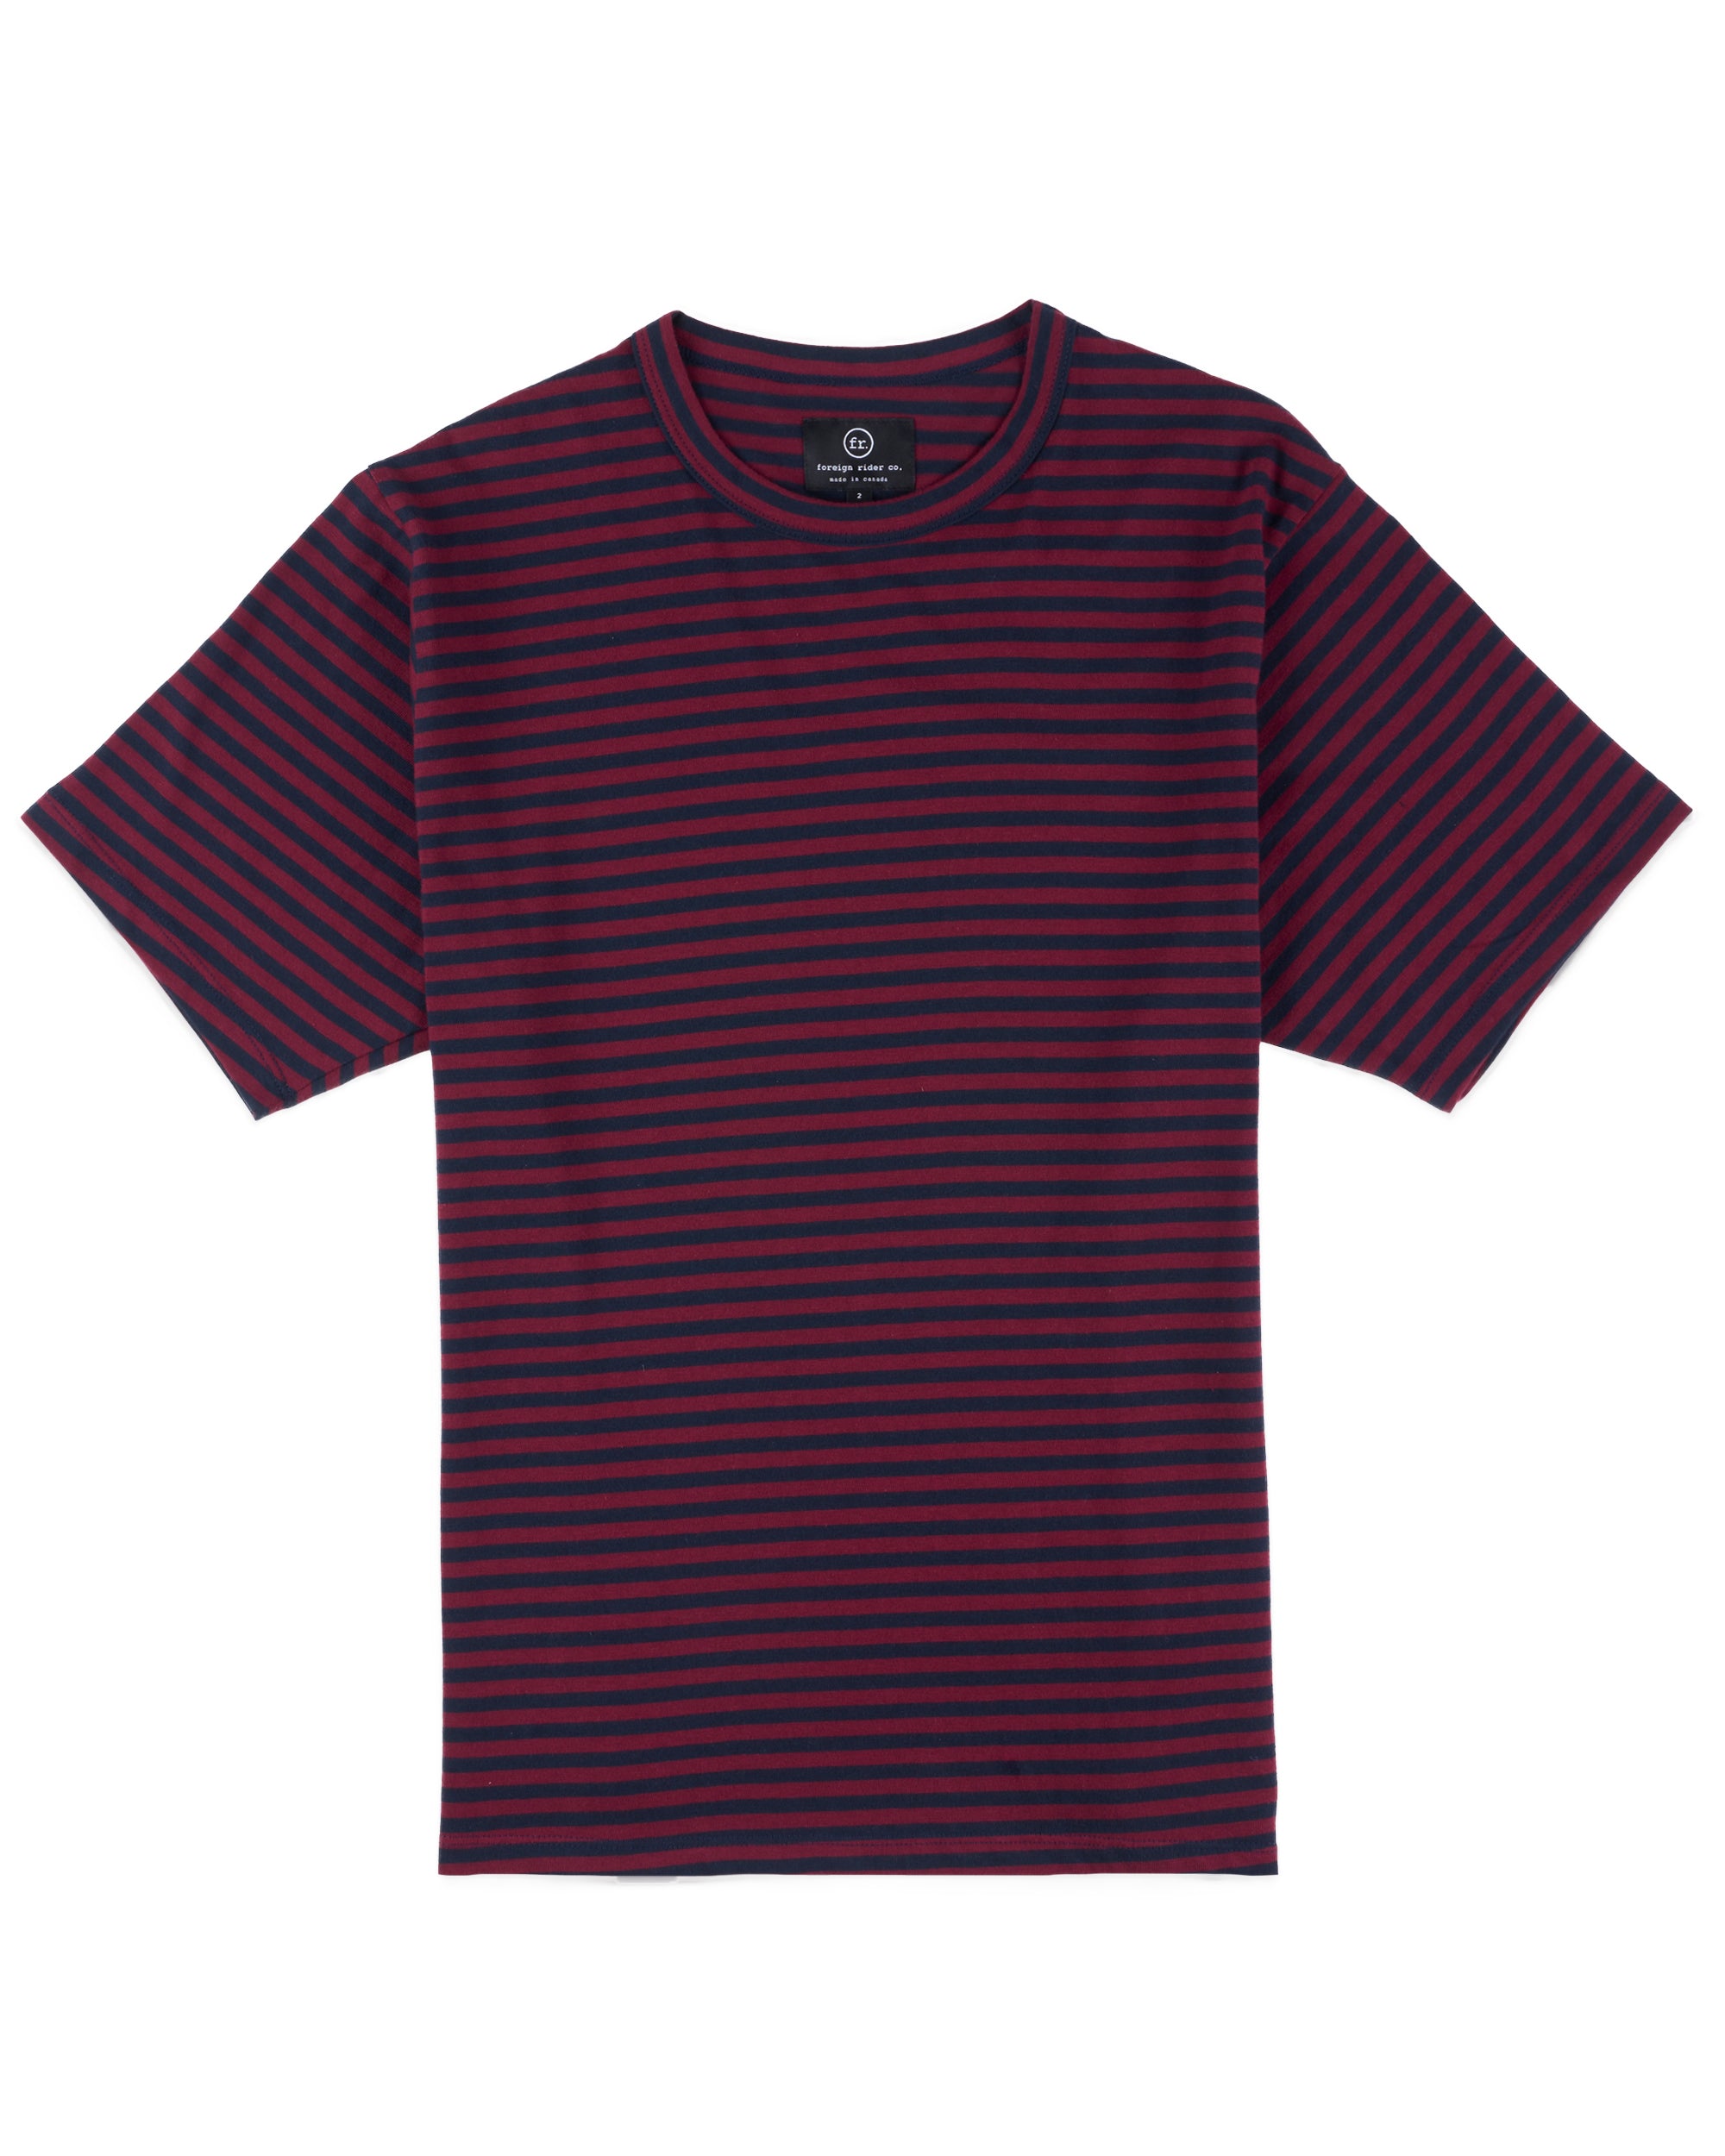 Vintage Stripe T-Shirt Navy / Burgundy - Foreign Rider Co.